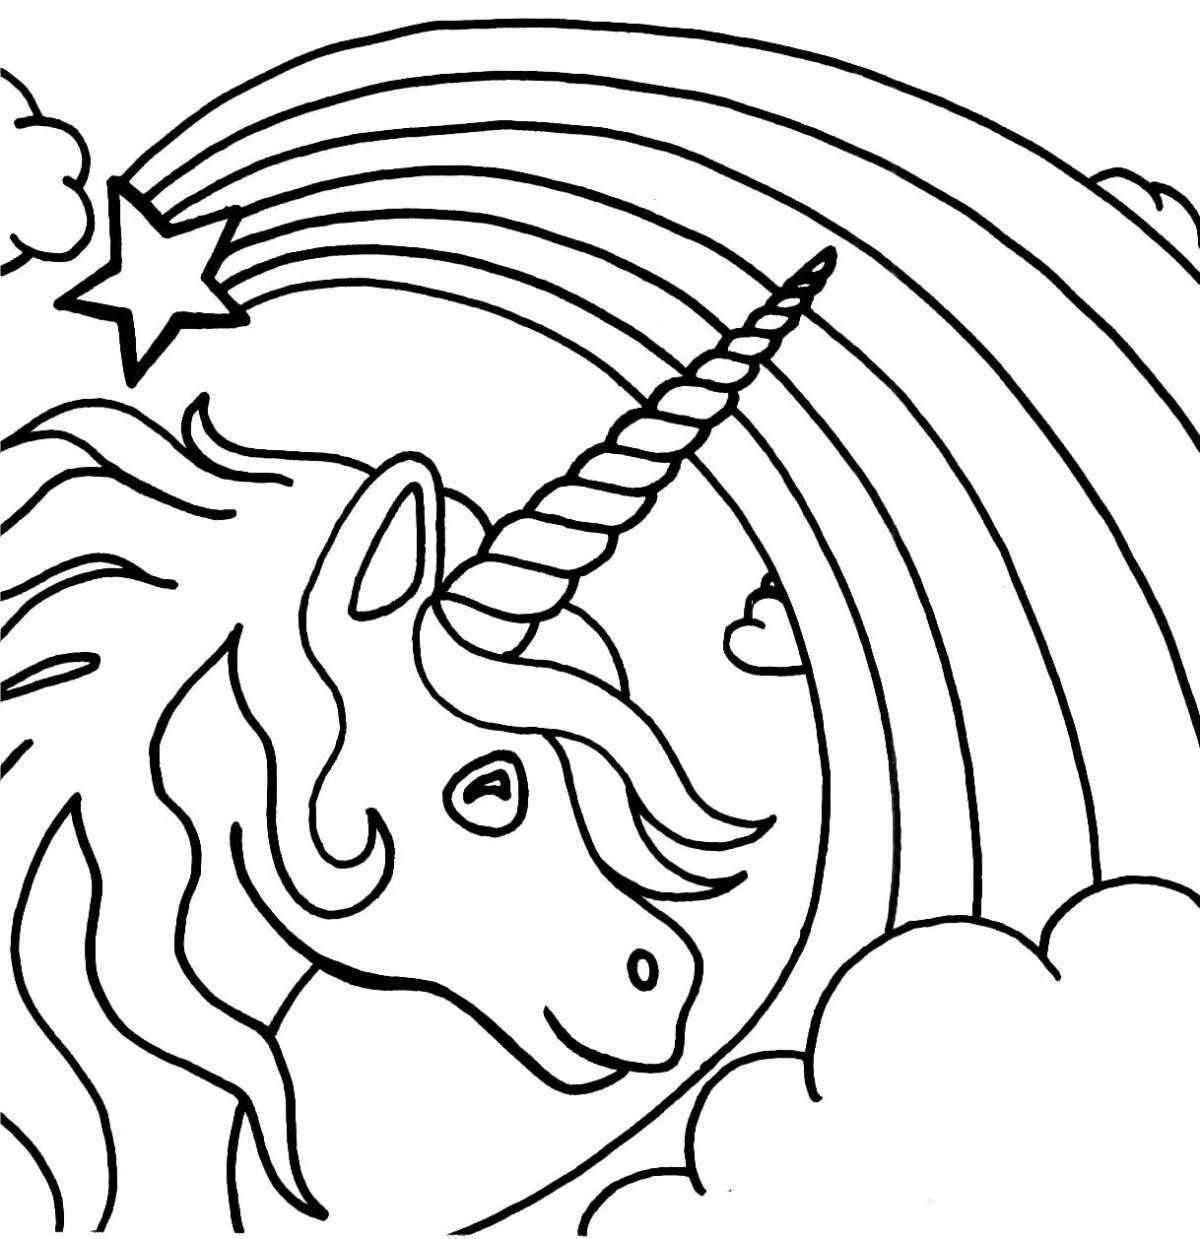 Great unicorn coloring book